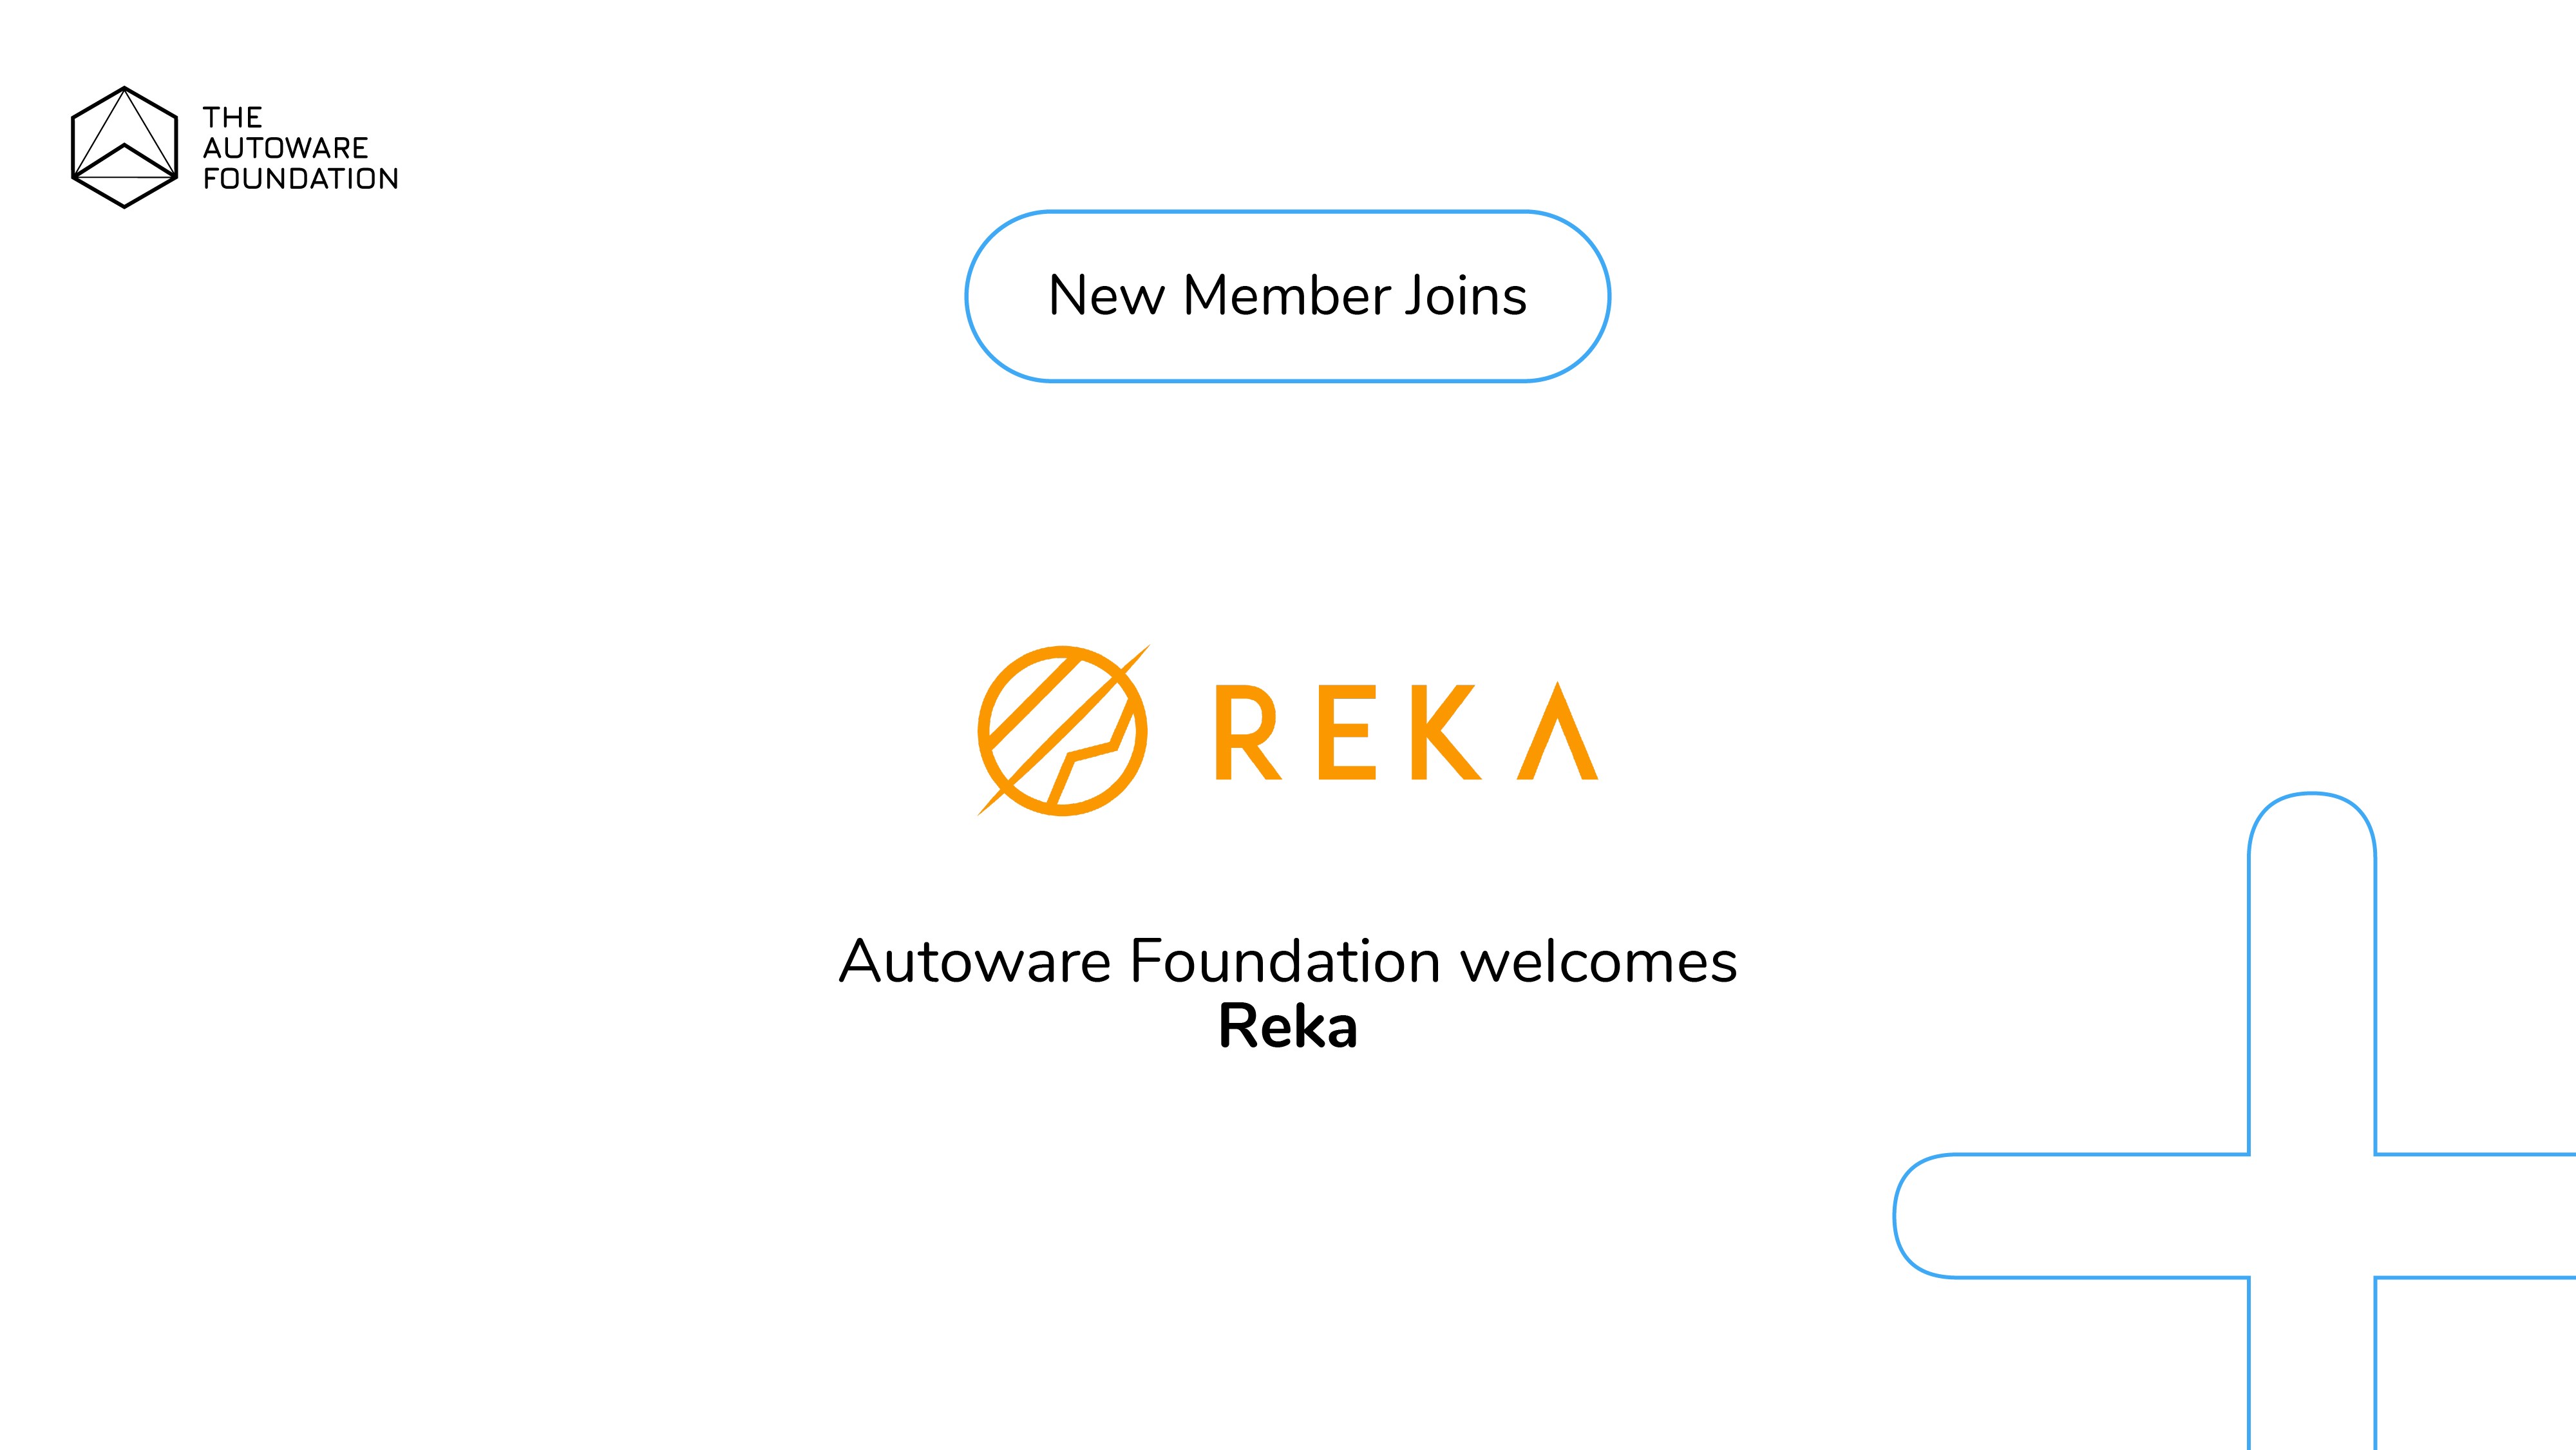 REKA joins the Autoware Foundation!